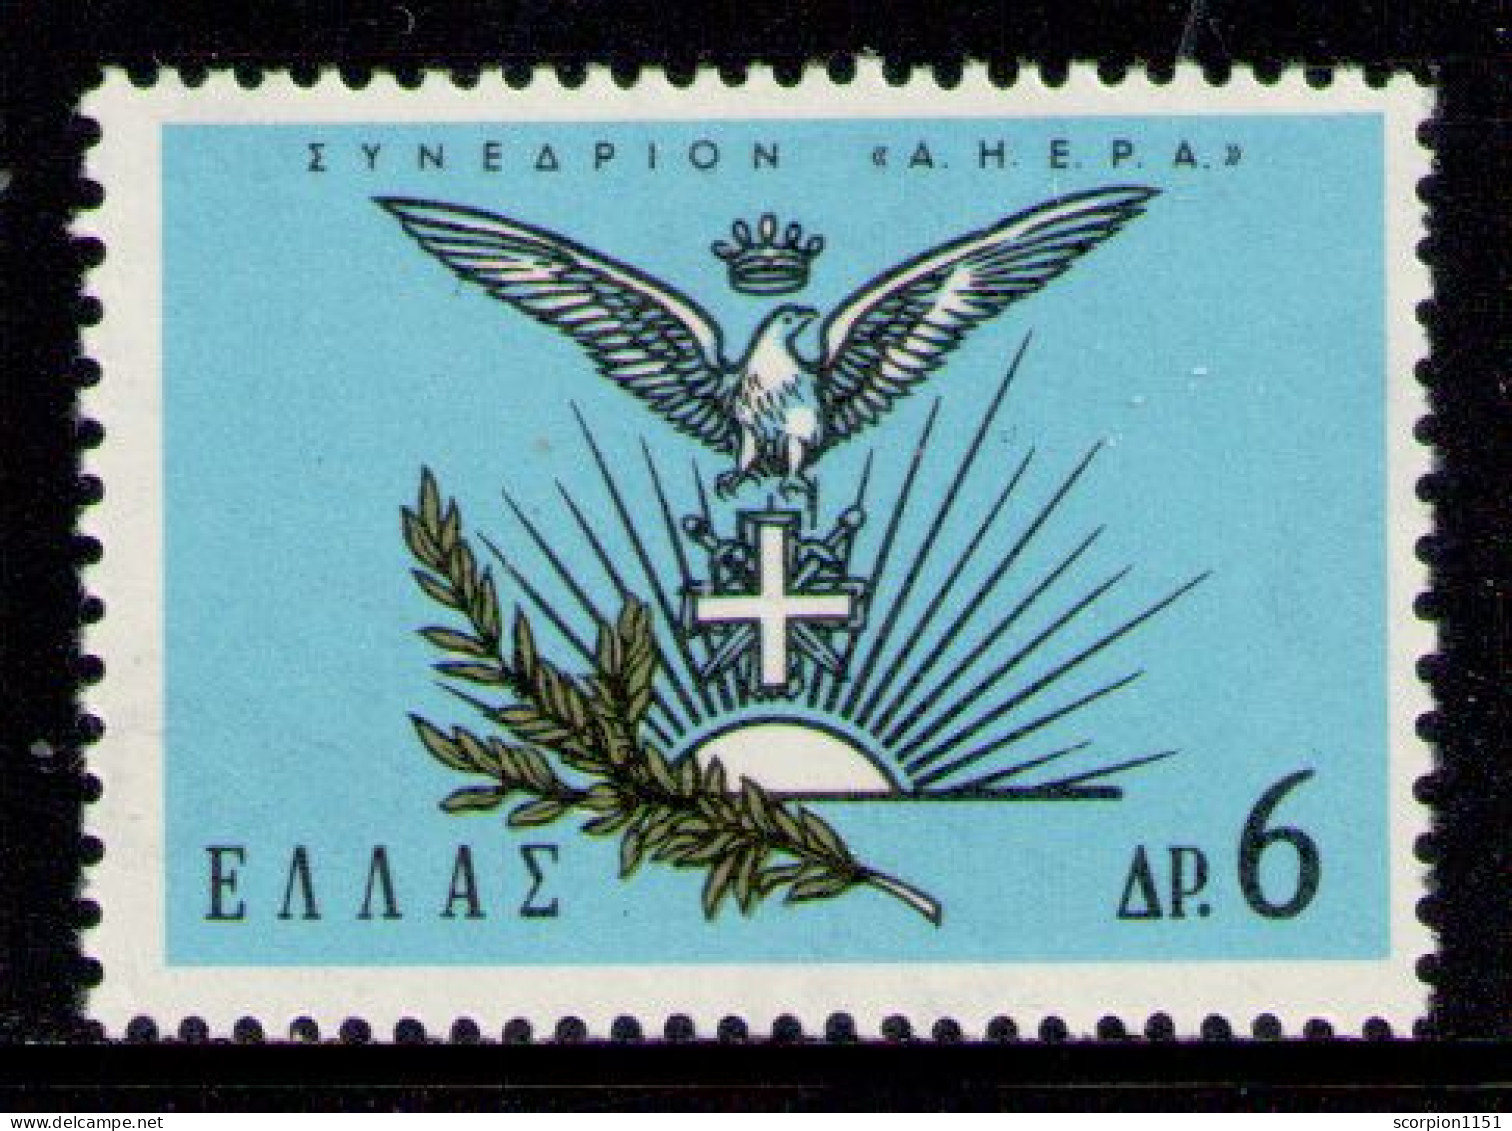 GREECE 1965 - Set MNH** - Unused Stamps